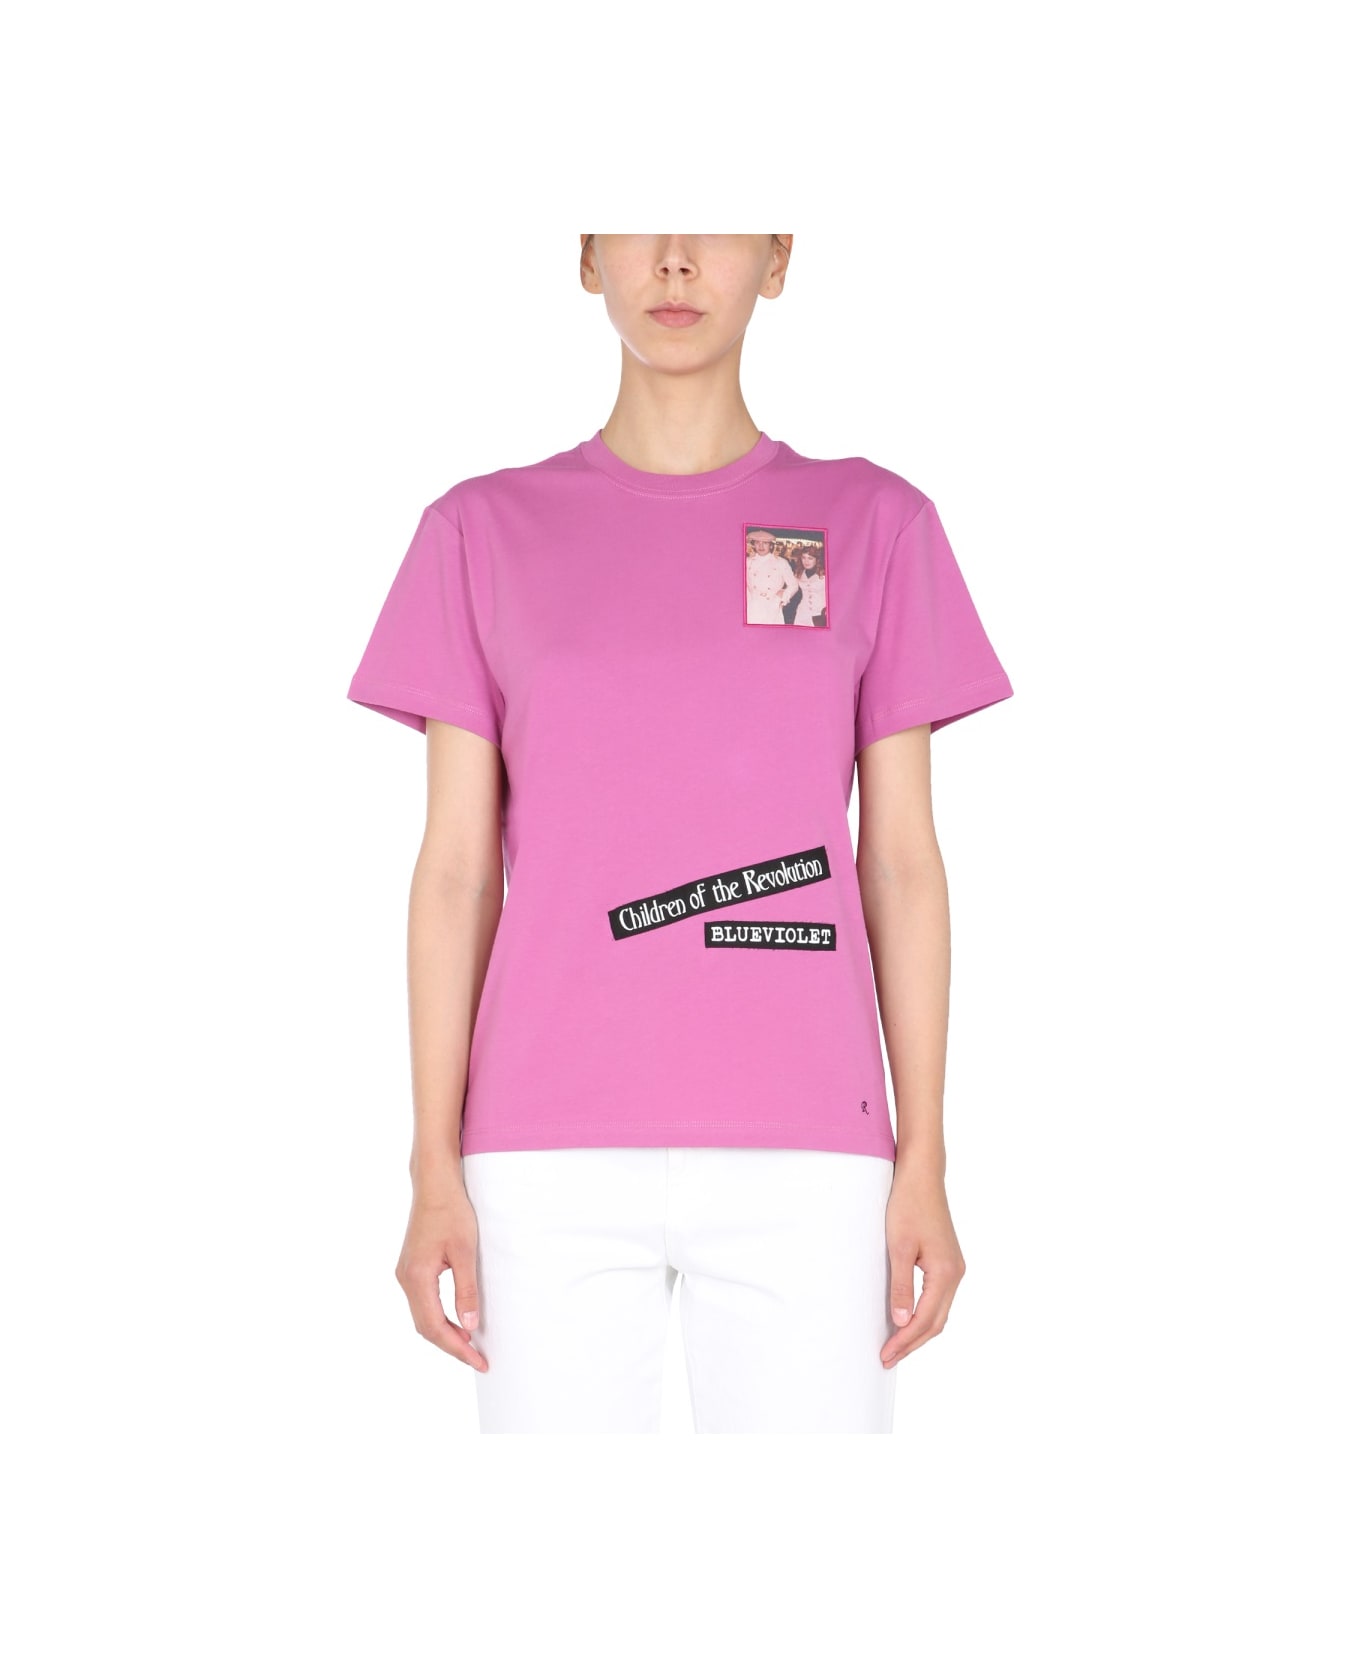 Raf Simons Crew Neck T-shirt - PINK Tシャツ